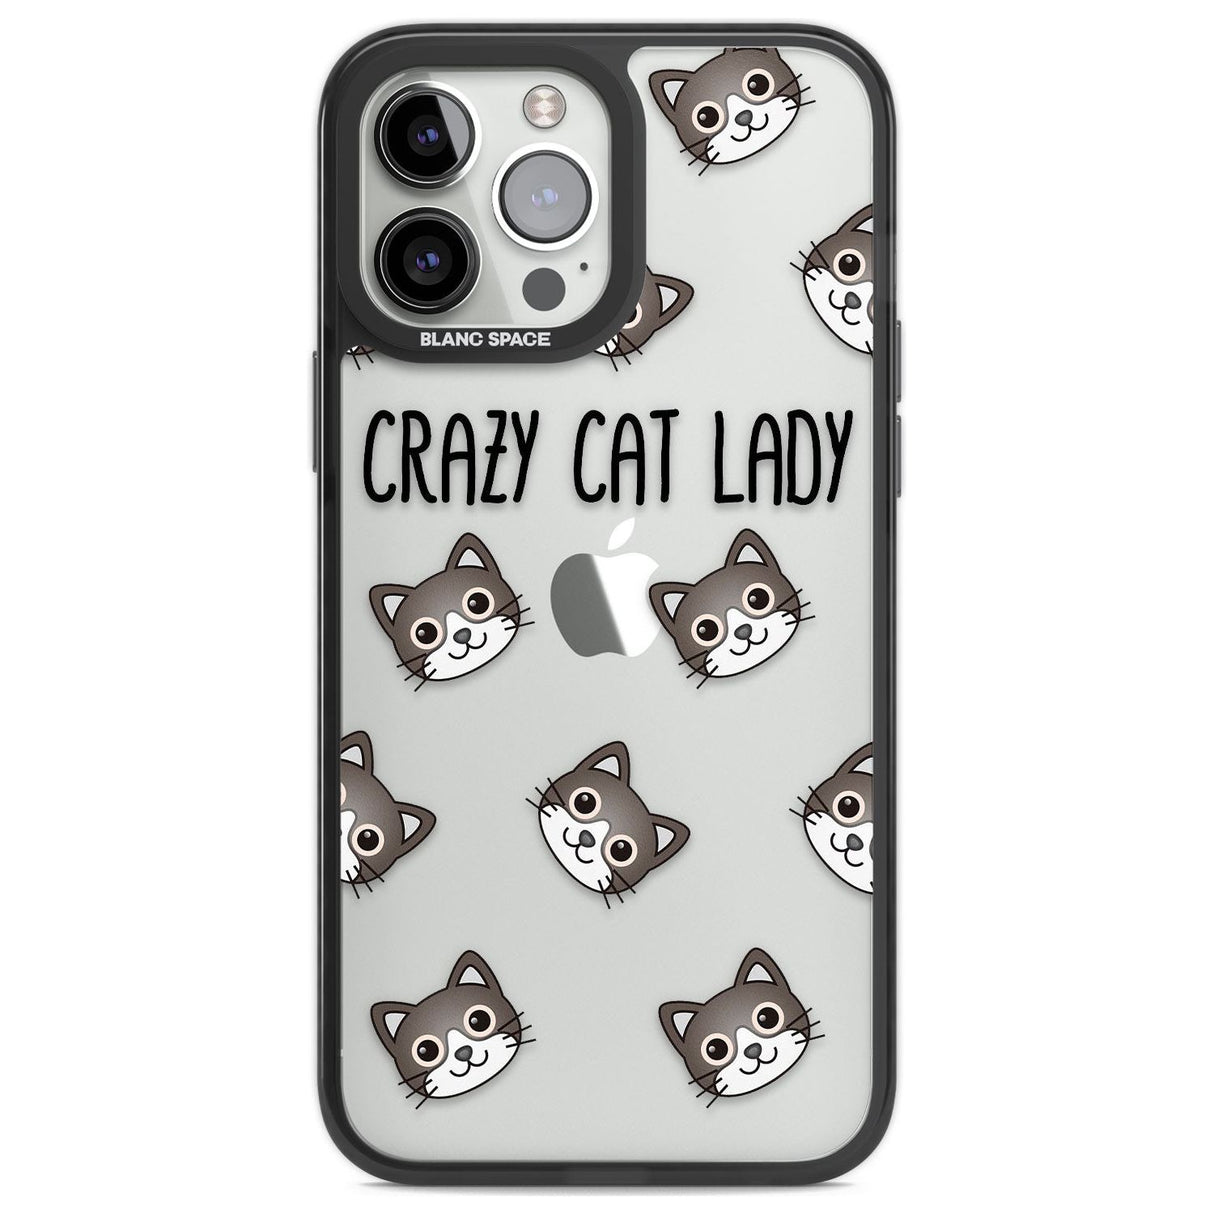 Crazy Cat Lady Phone Case iPhone 14 Pro Max / Black Impact Case,iPhone 13 Pro Max / Black Impact Case Blanc Space